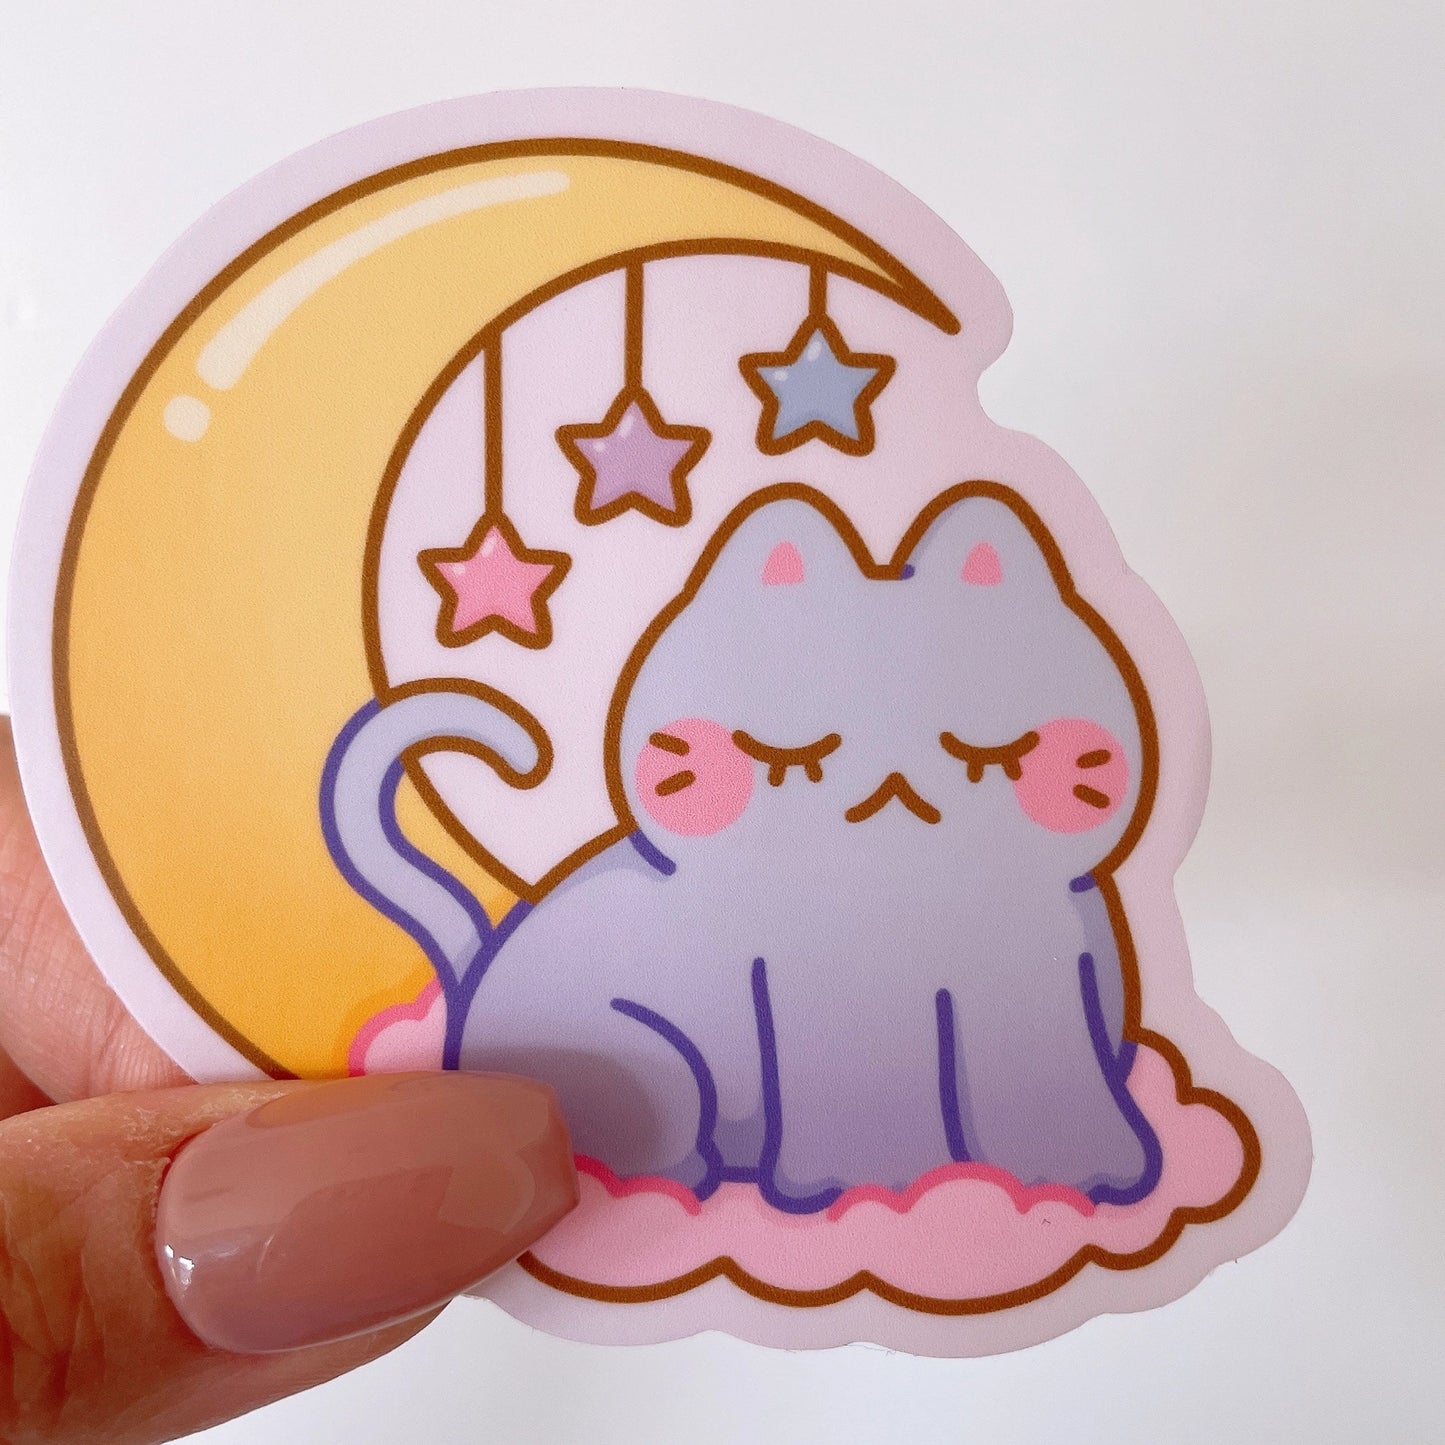 Moon Cat Sticker